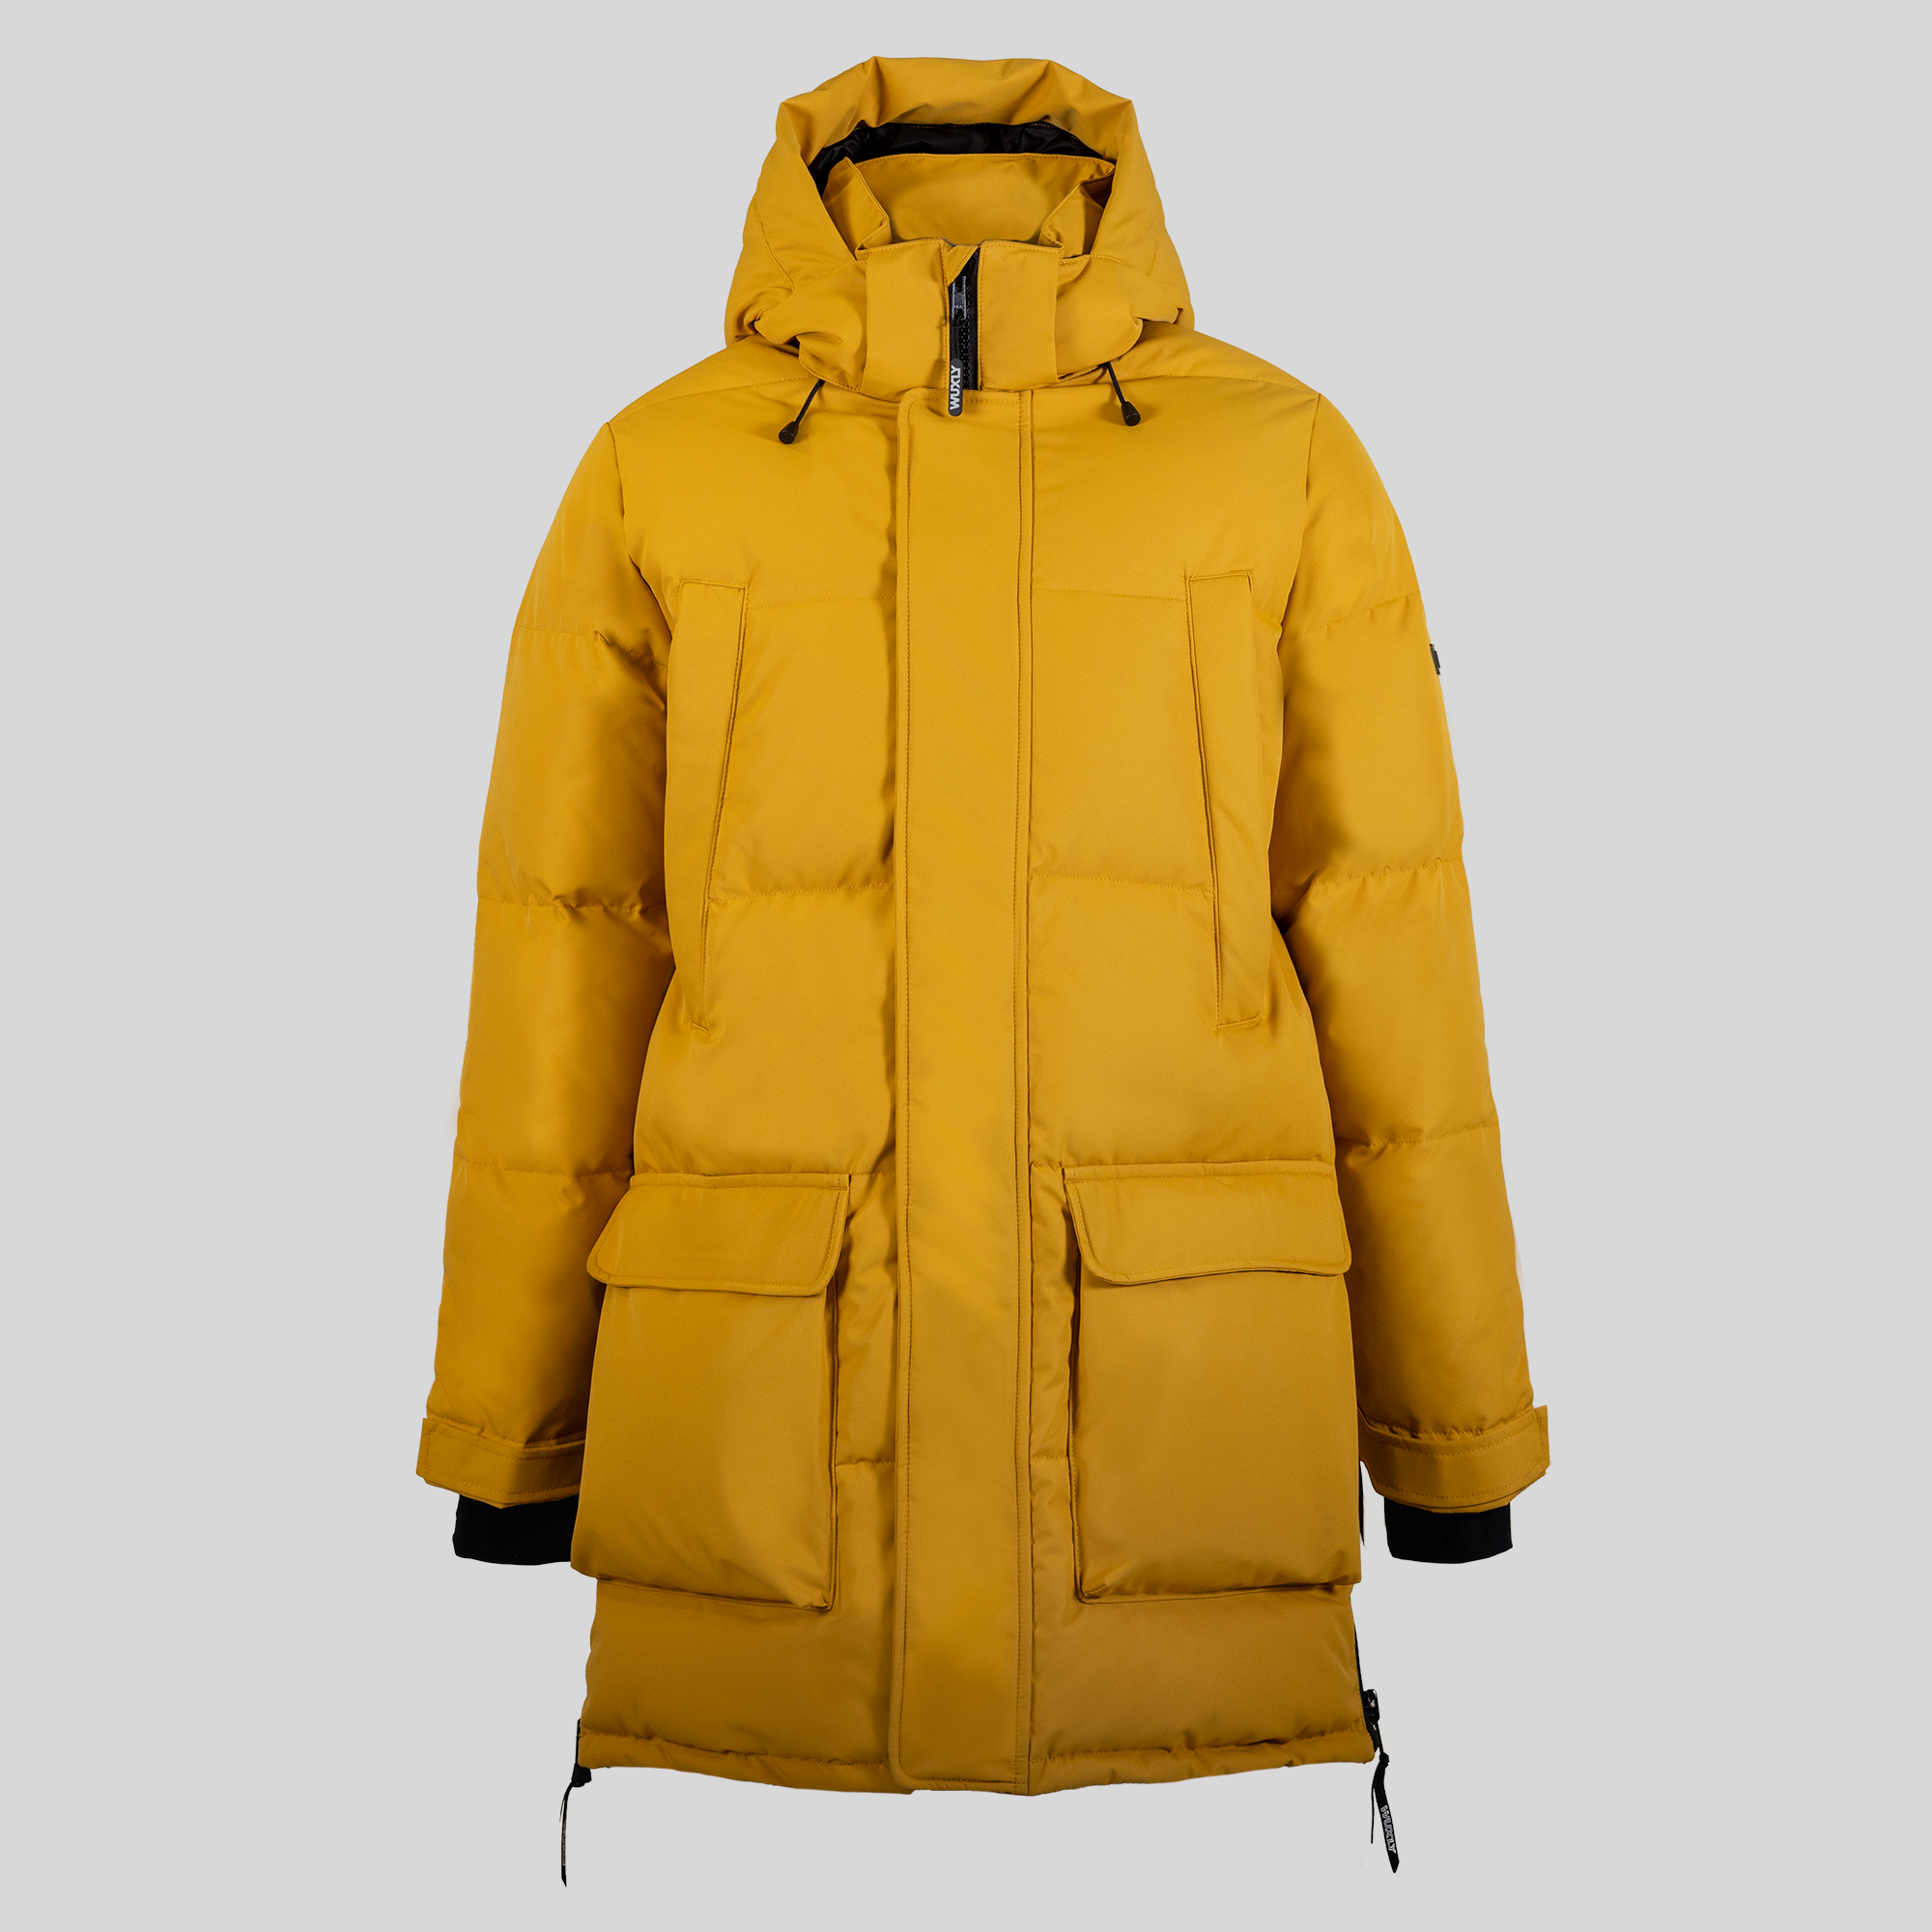 Yellow and blue parka jacket illustration, Winter clothing Winter